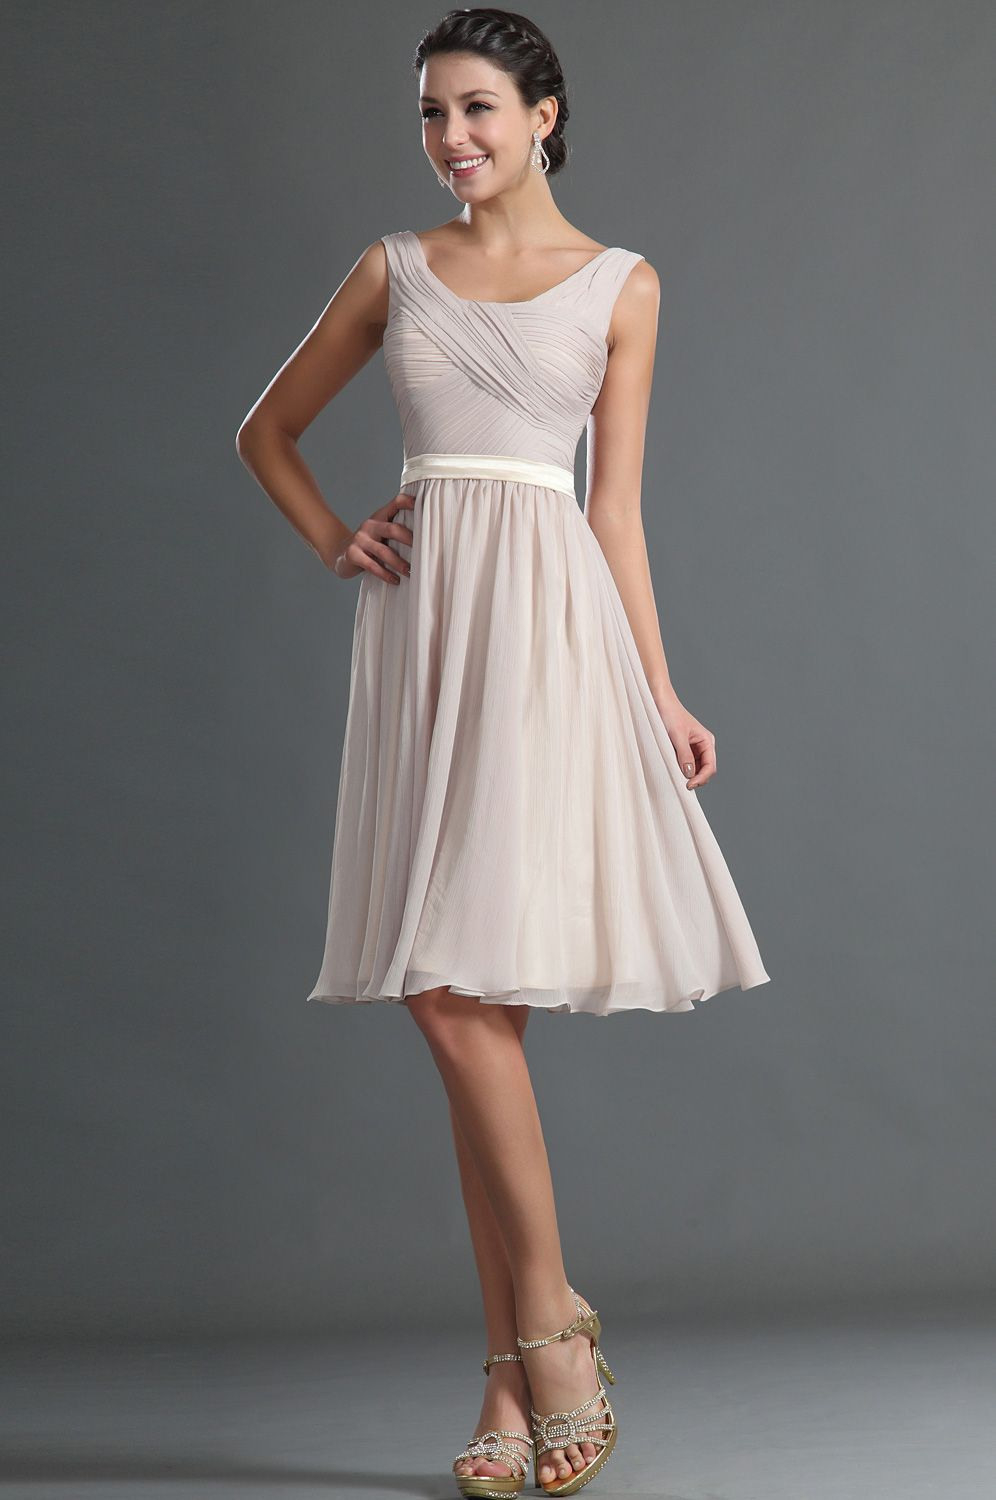 Simple Cocktail Dress Party Dress (04124914) | Party Kleider